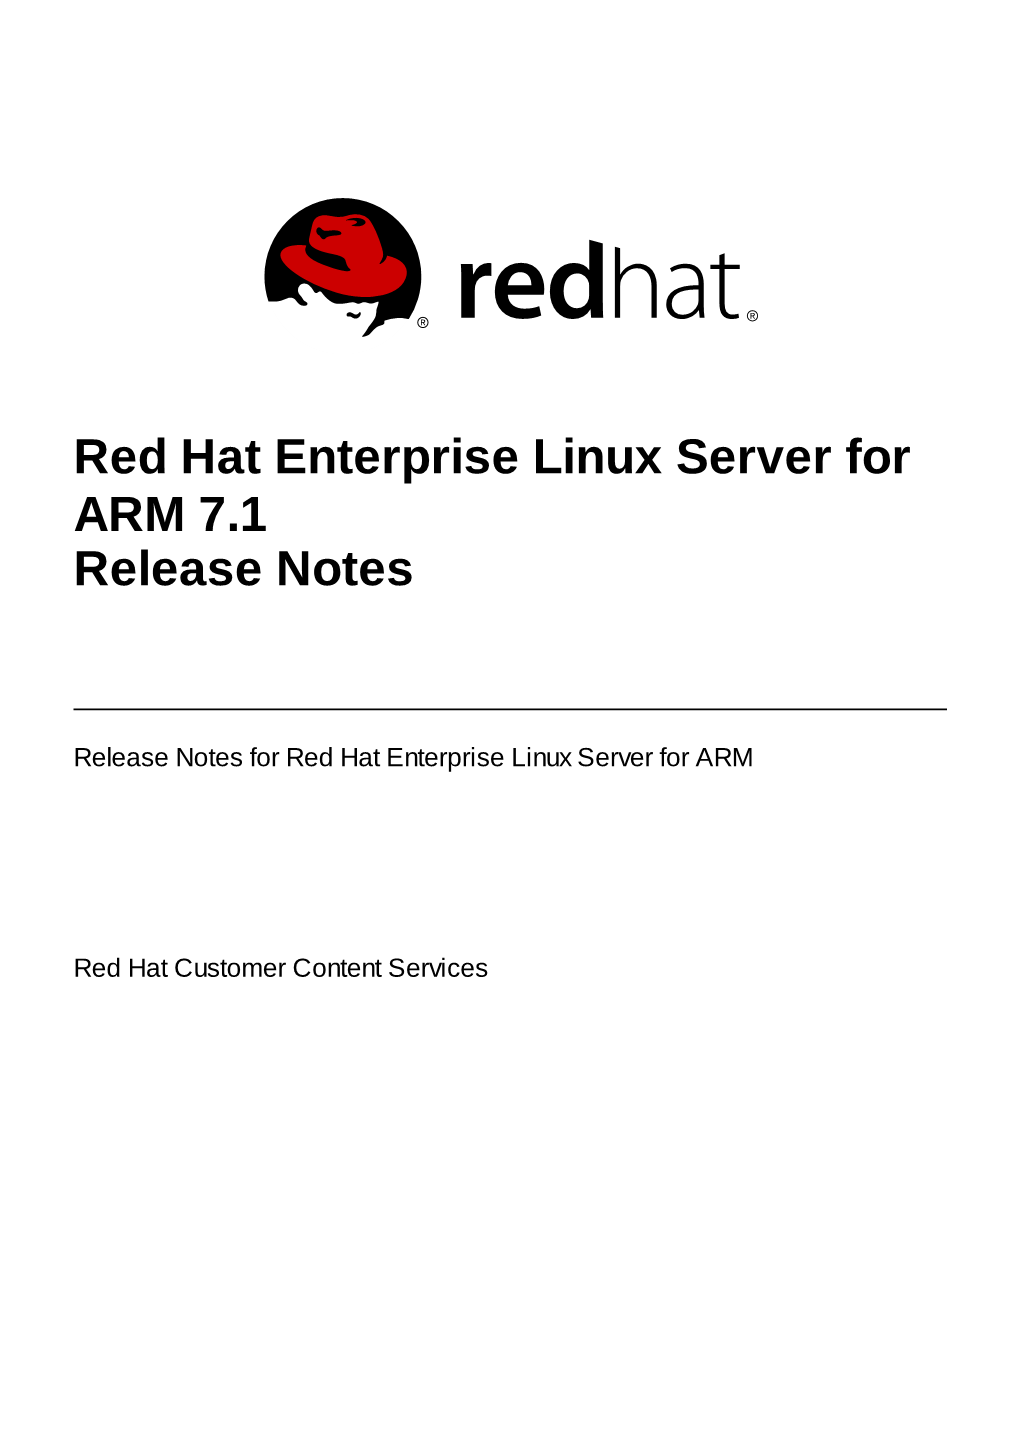 Red Hat Enterprise Linux Server for ARM 7.1 Release Notes